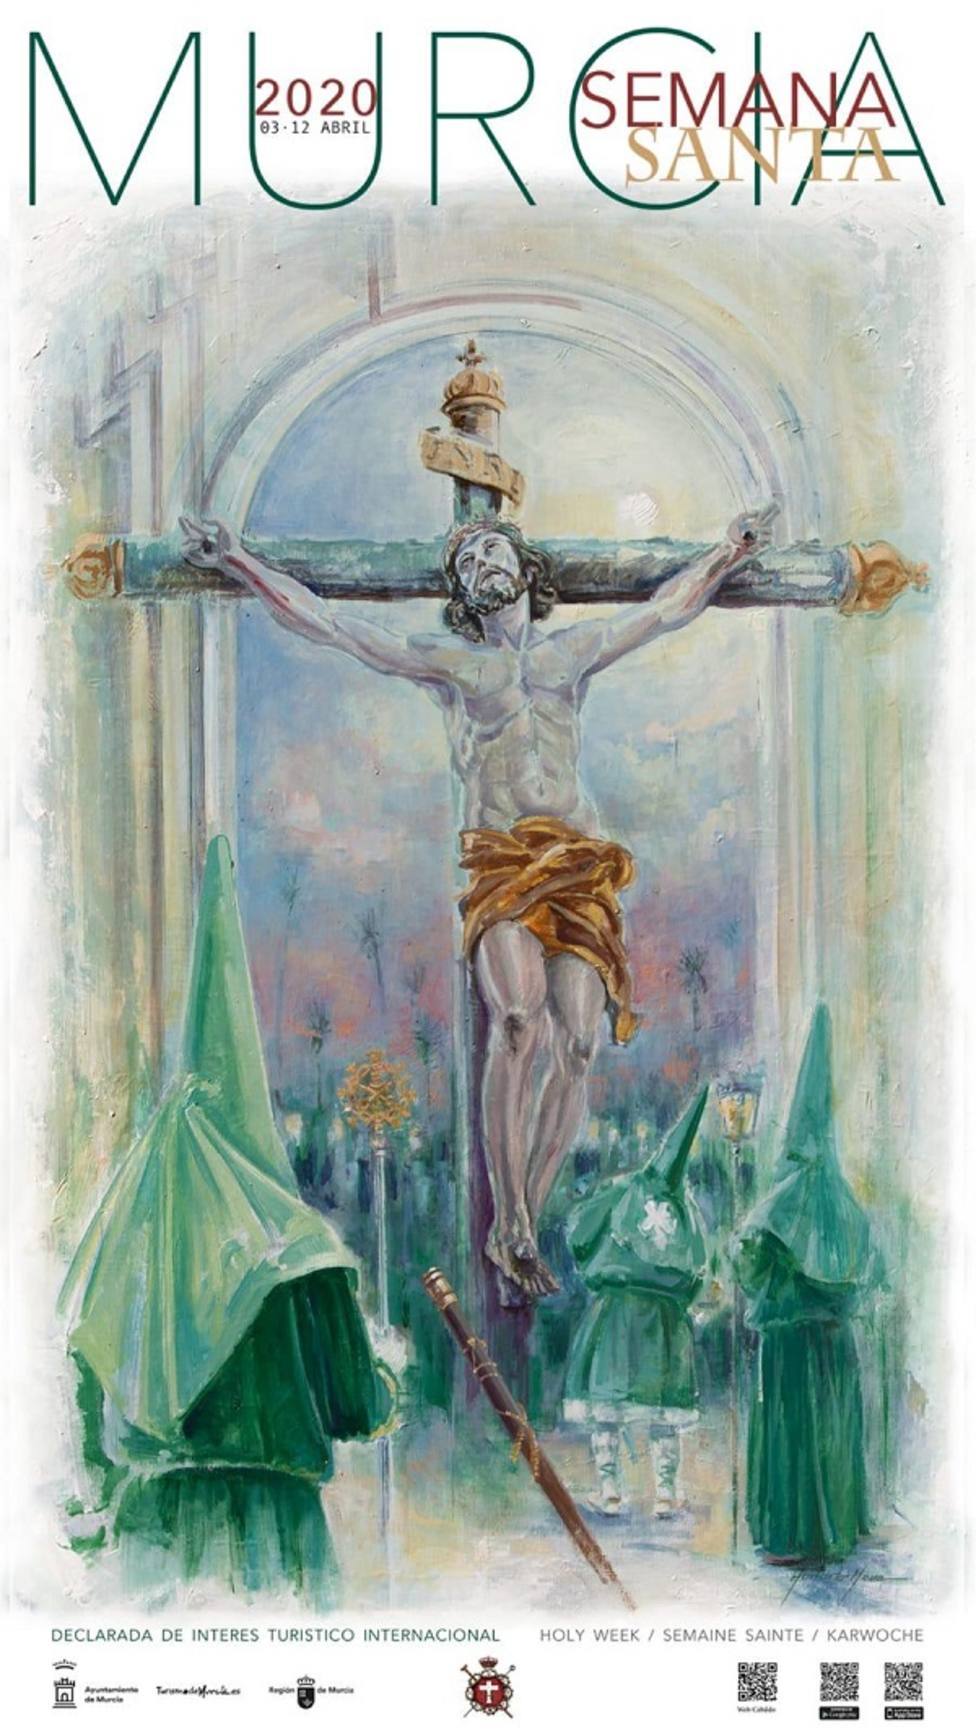 La Esperanza ilumina de verde el cartel de la Semana Santa murciana 2020, a través del pincel de José Hurtado